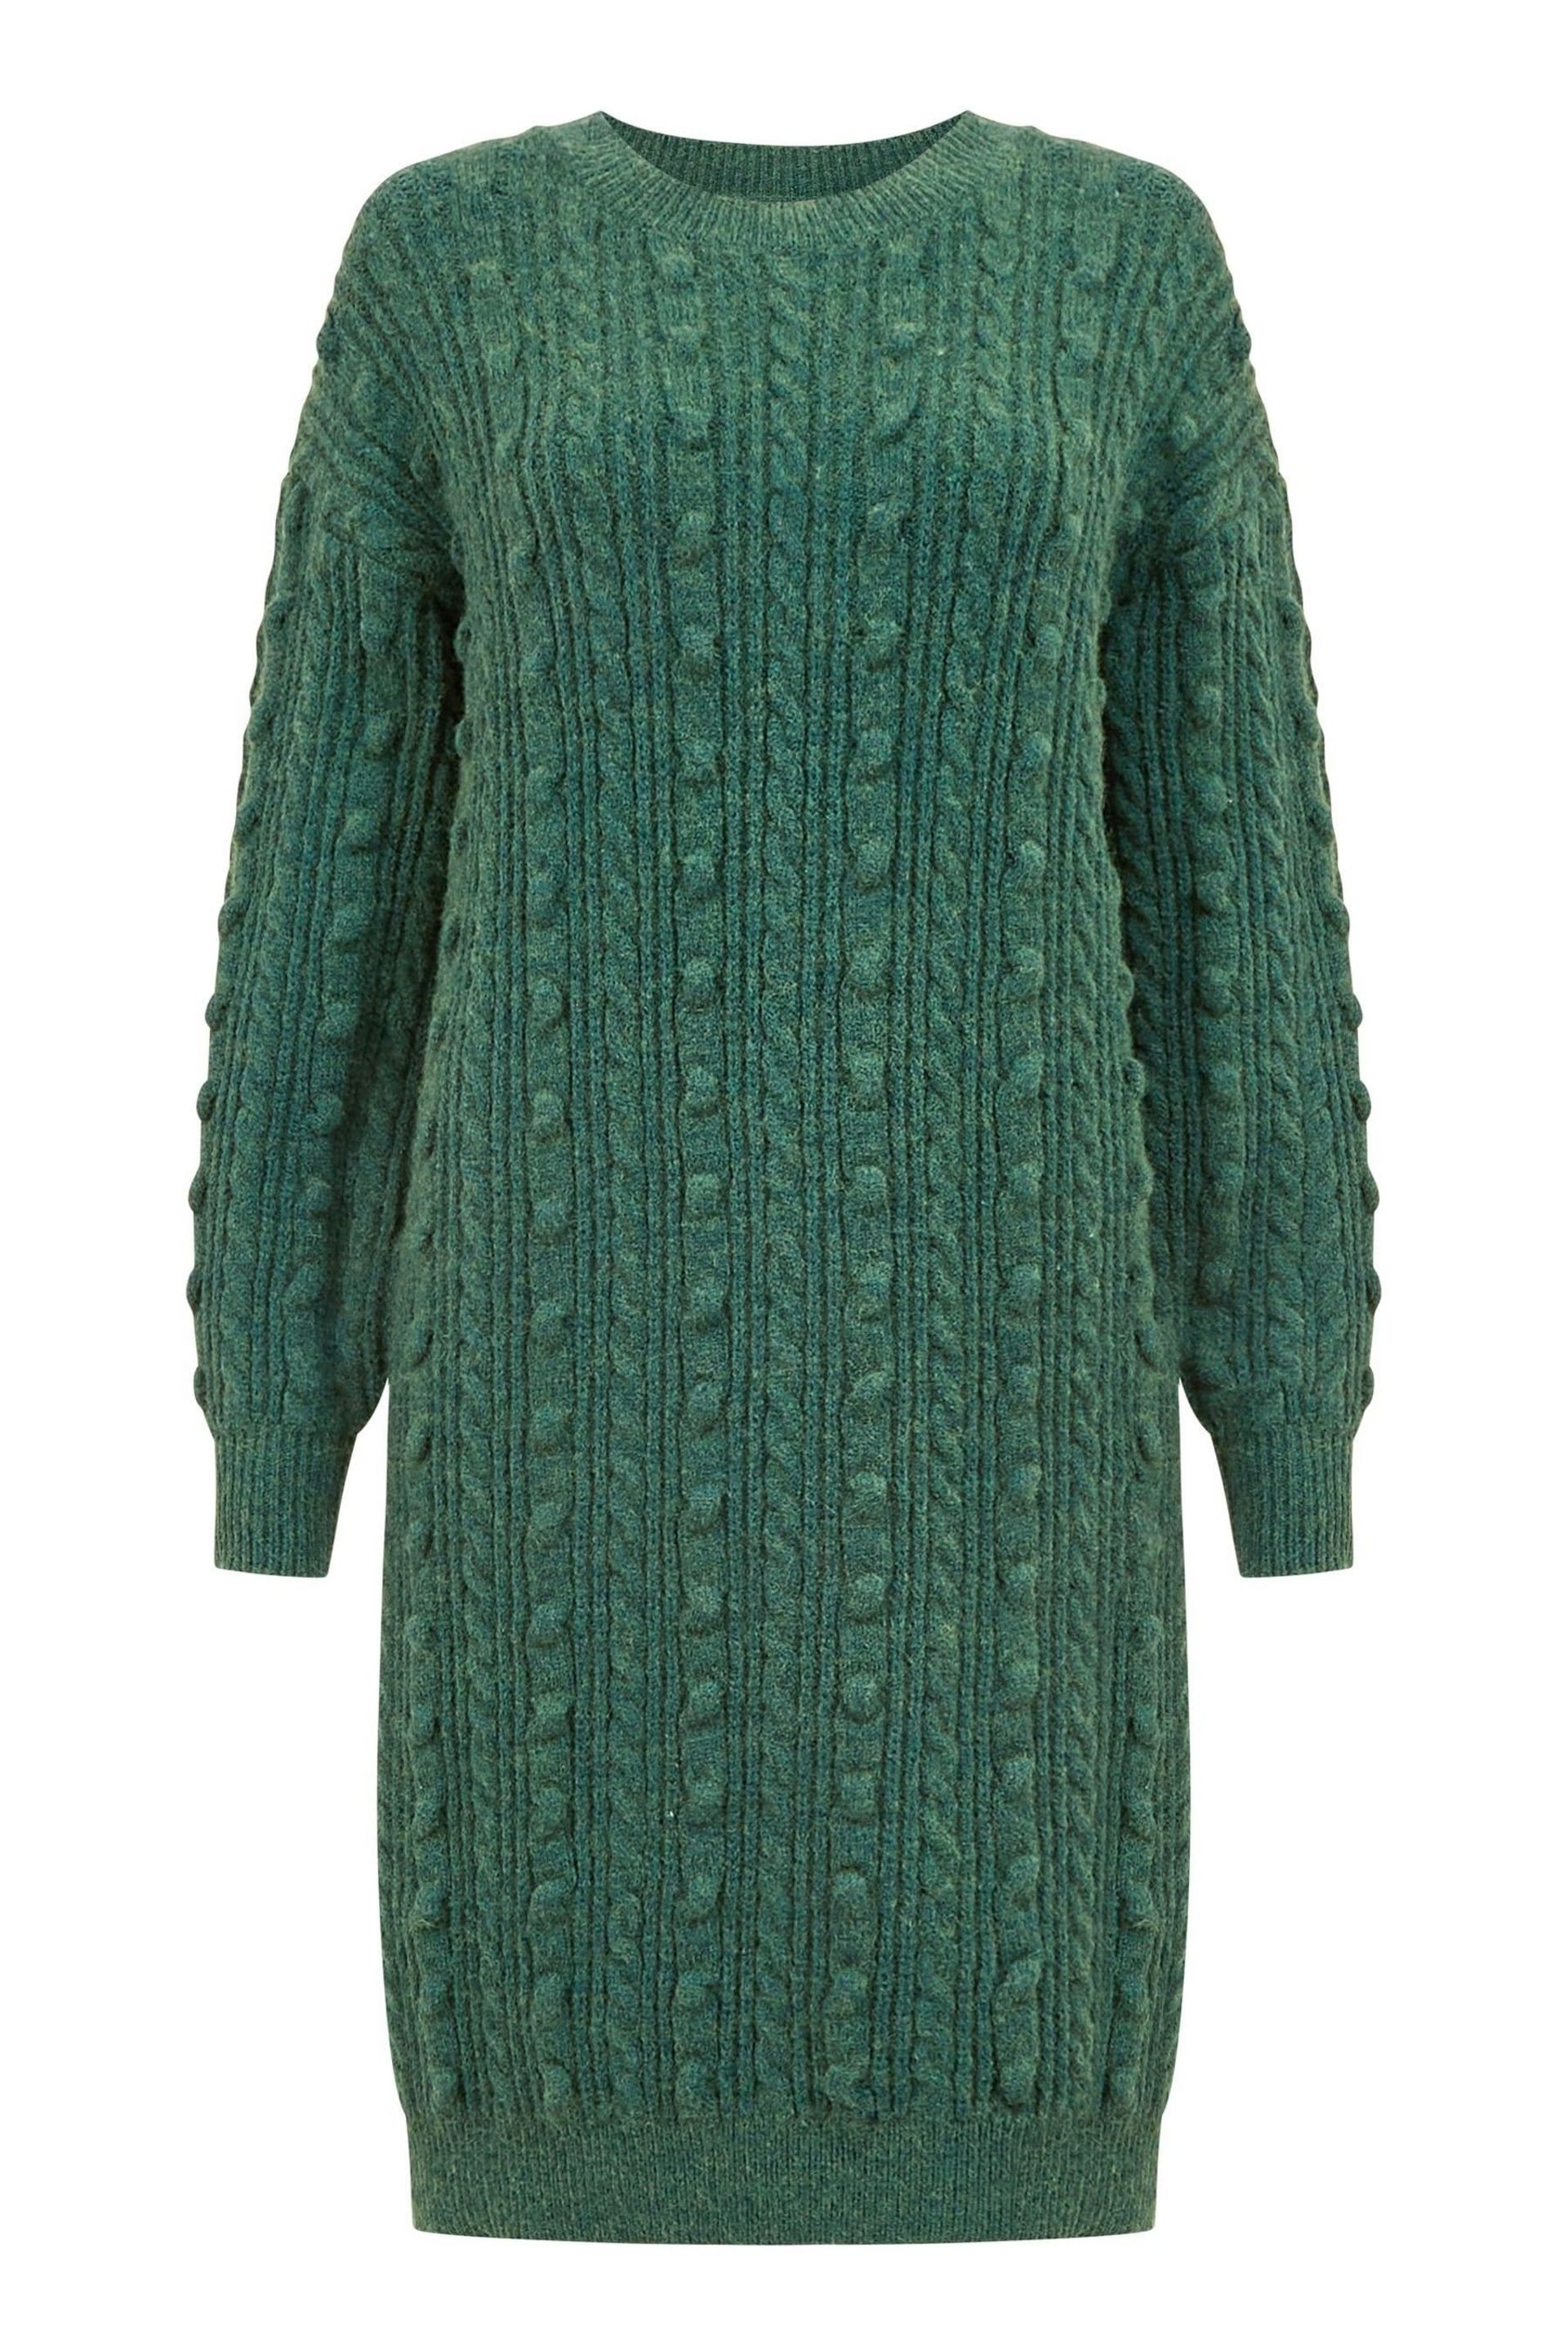 Yumi Green Cable Knit Tunic Dress - Image 5 of 5